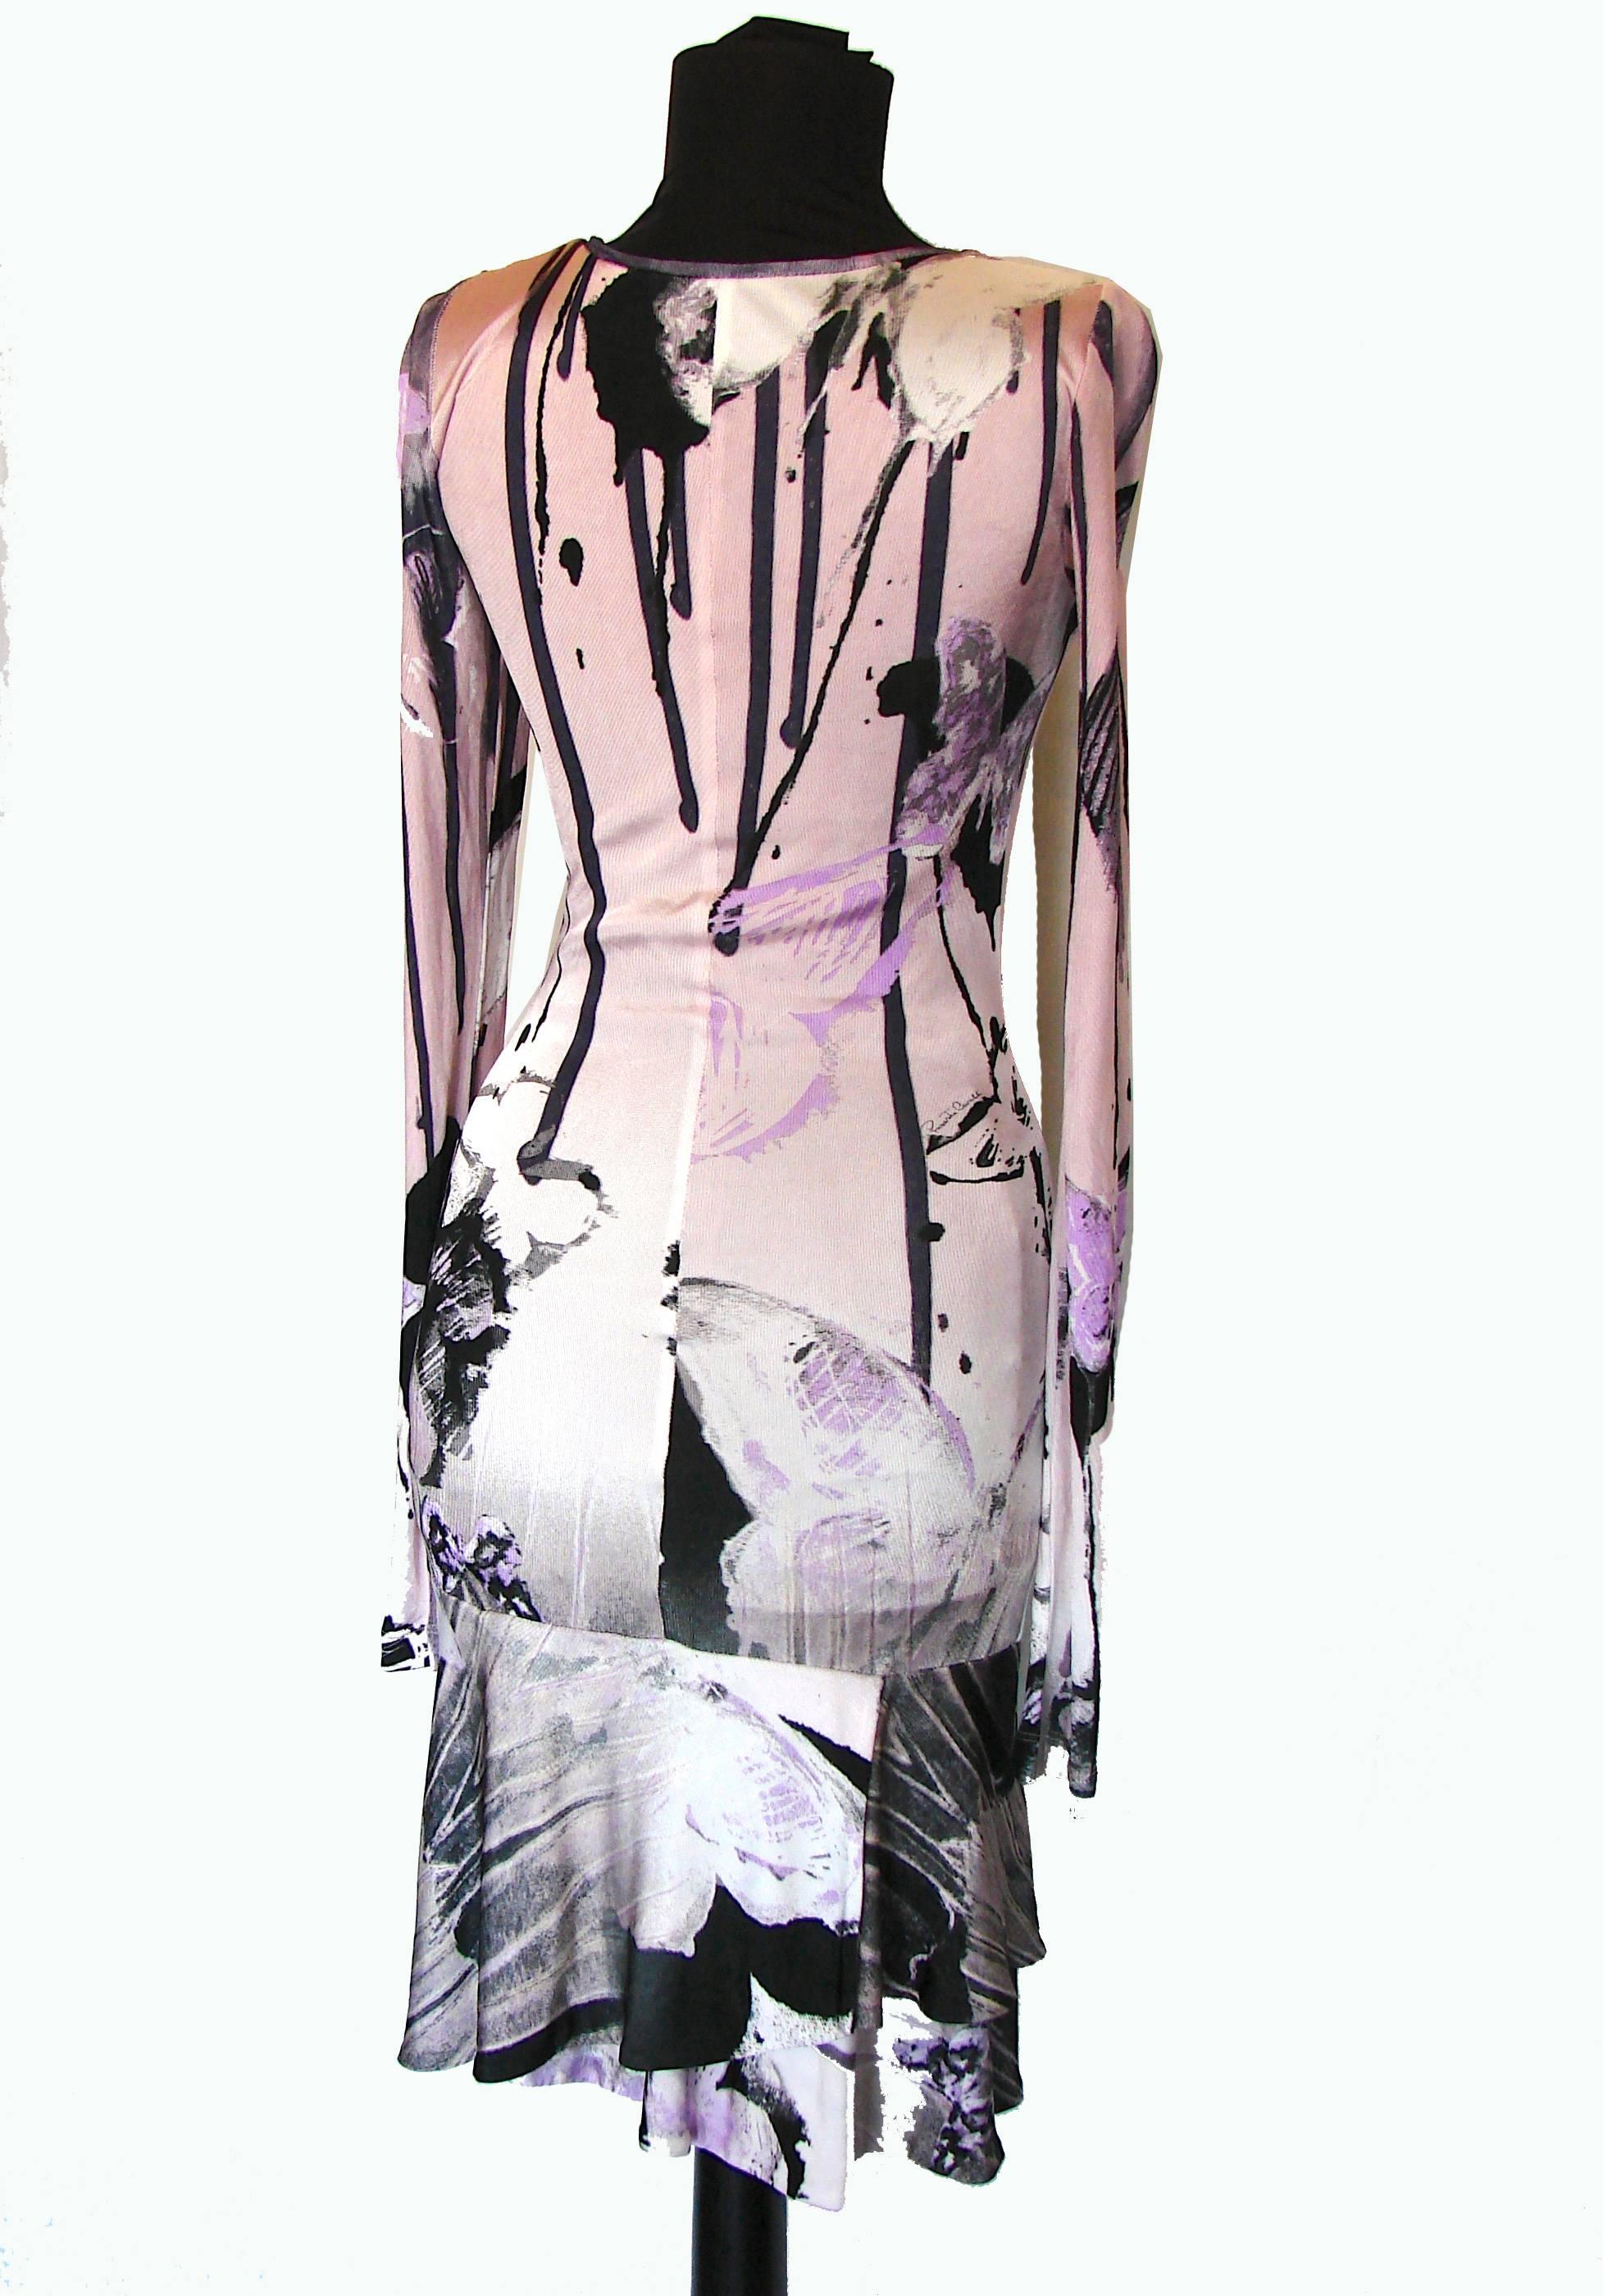 Gray Roberto Cavalli Vibrant Butterfly Print Dress Bodycon Tiered Hem Size 36